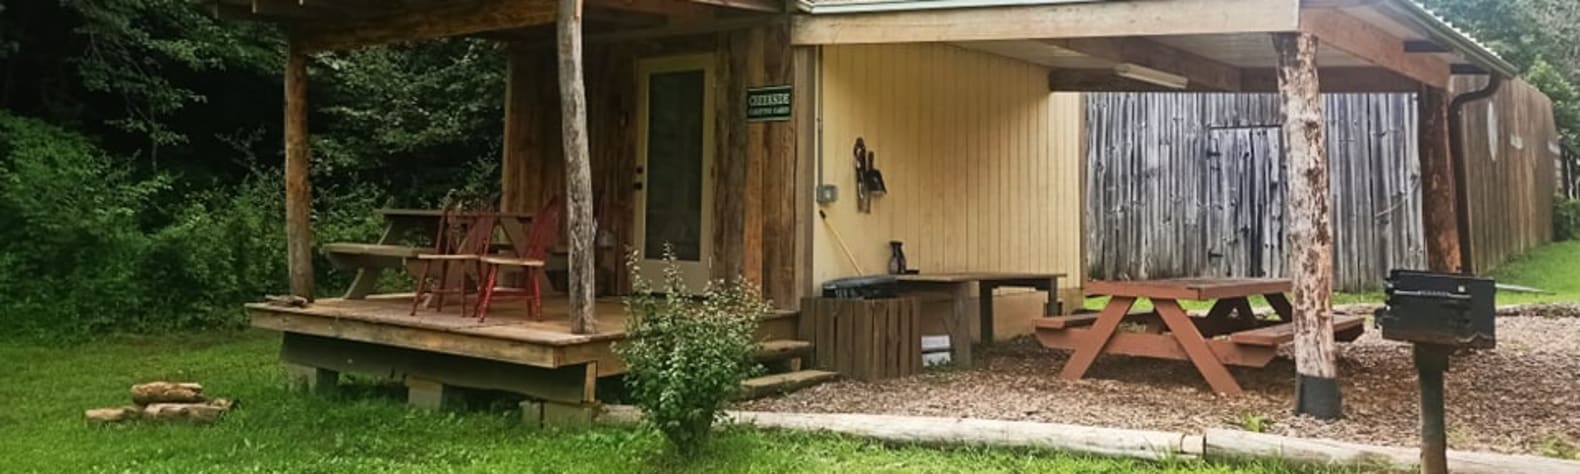 Creekside camping cabin